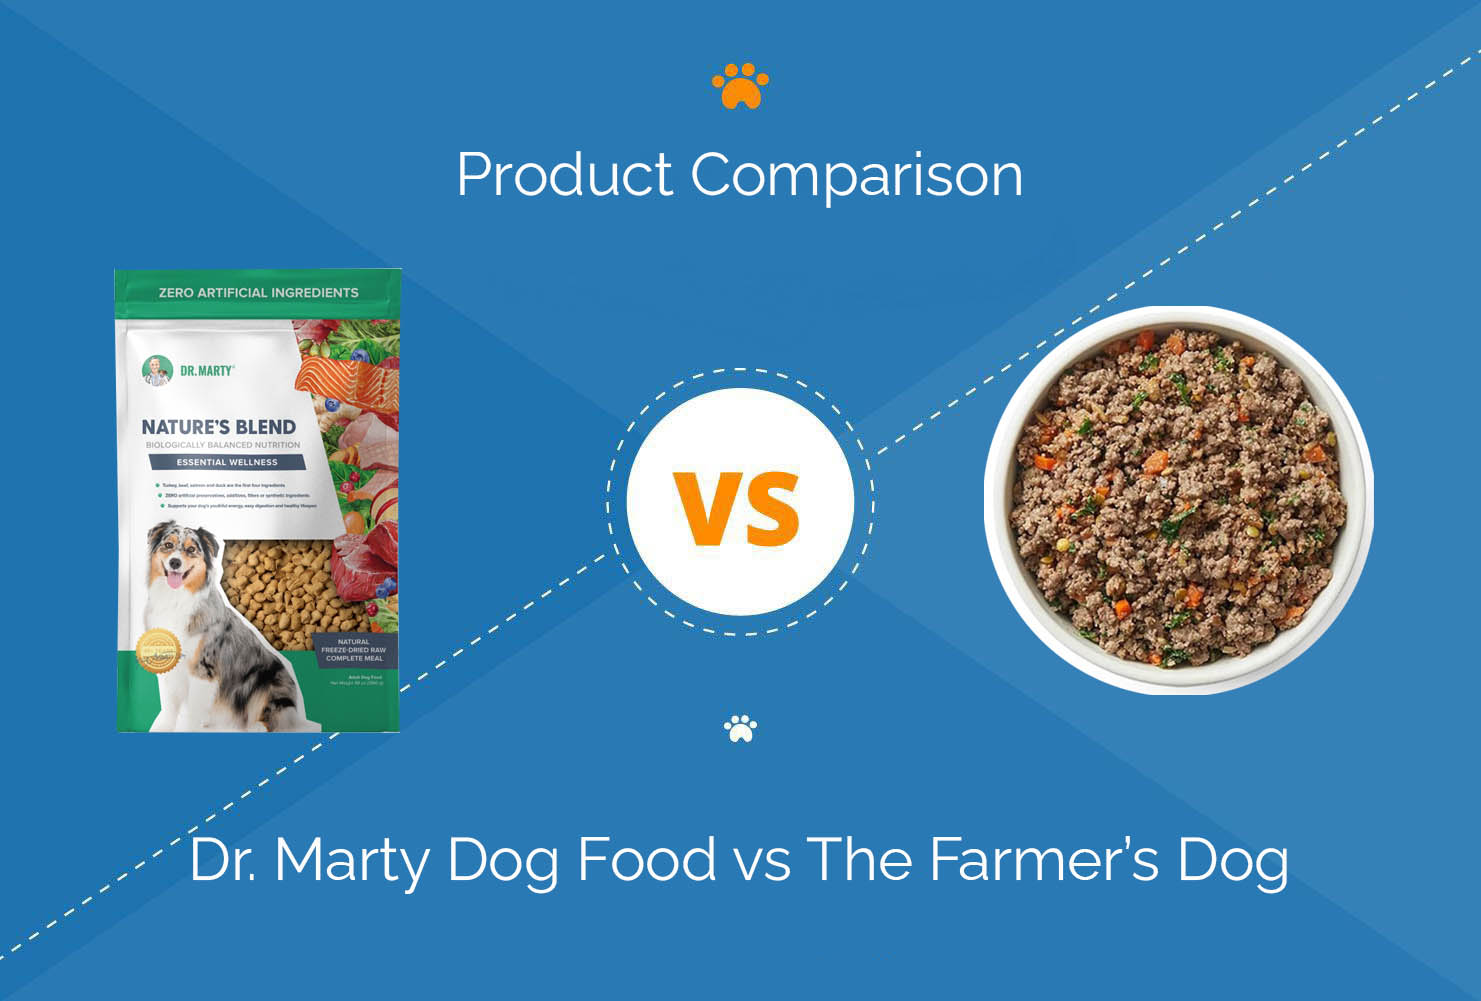 Dr. Marty Dog Food vs The Farmer’s Dog